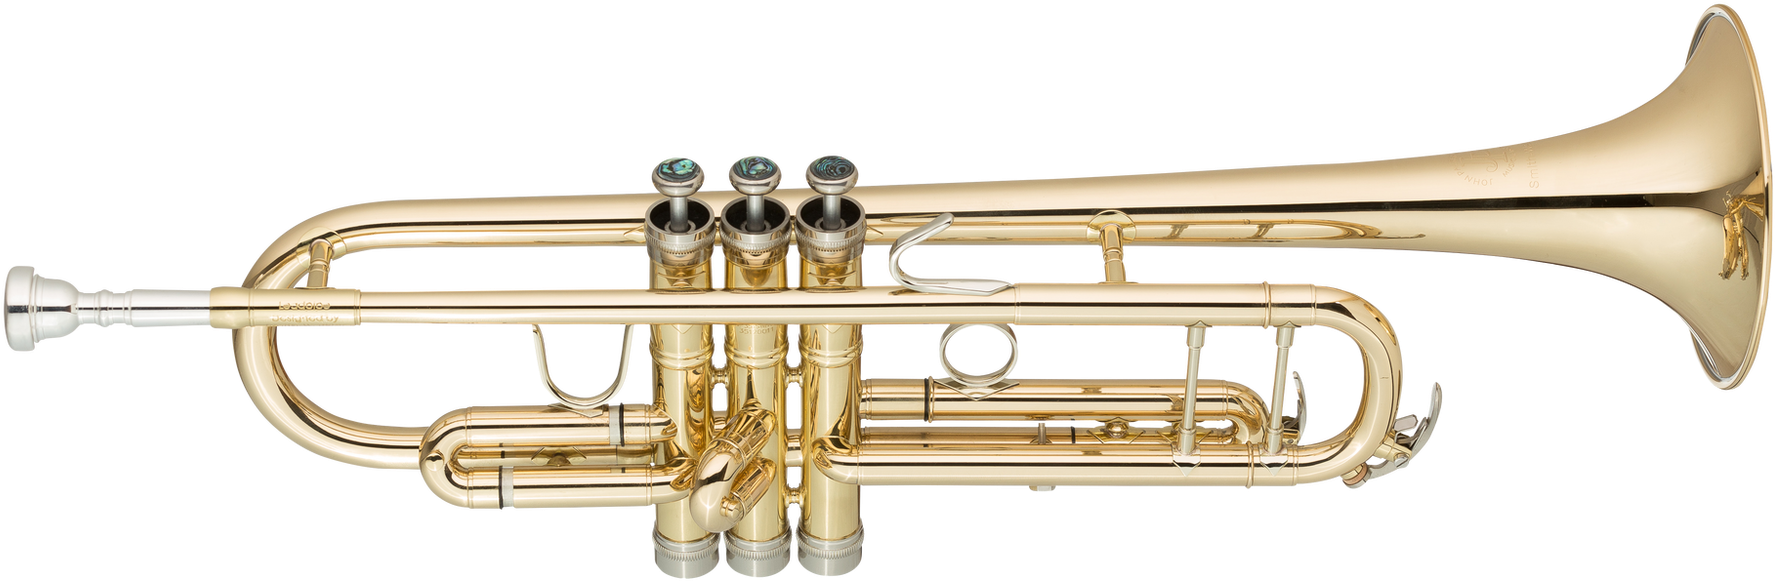 Gold Trumpet Isolatedon Background PNG image